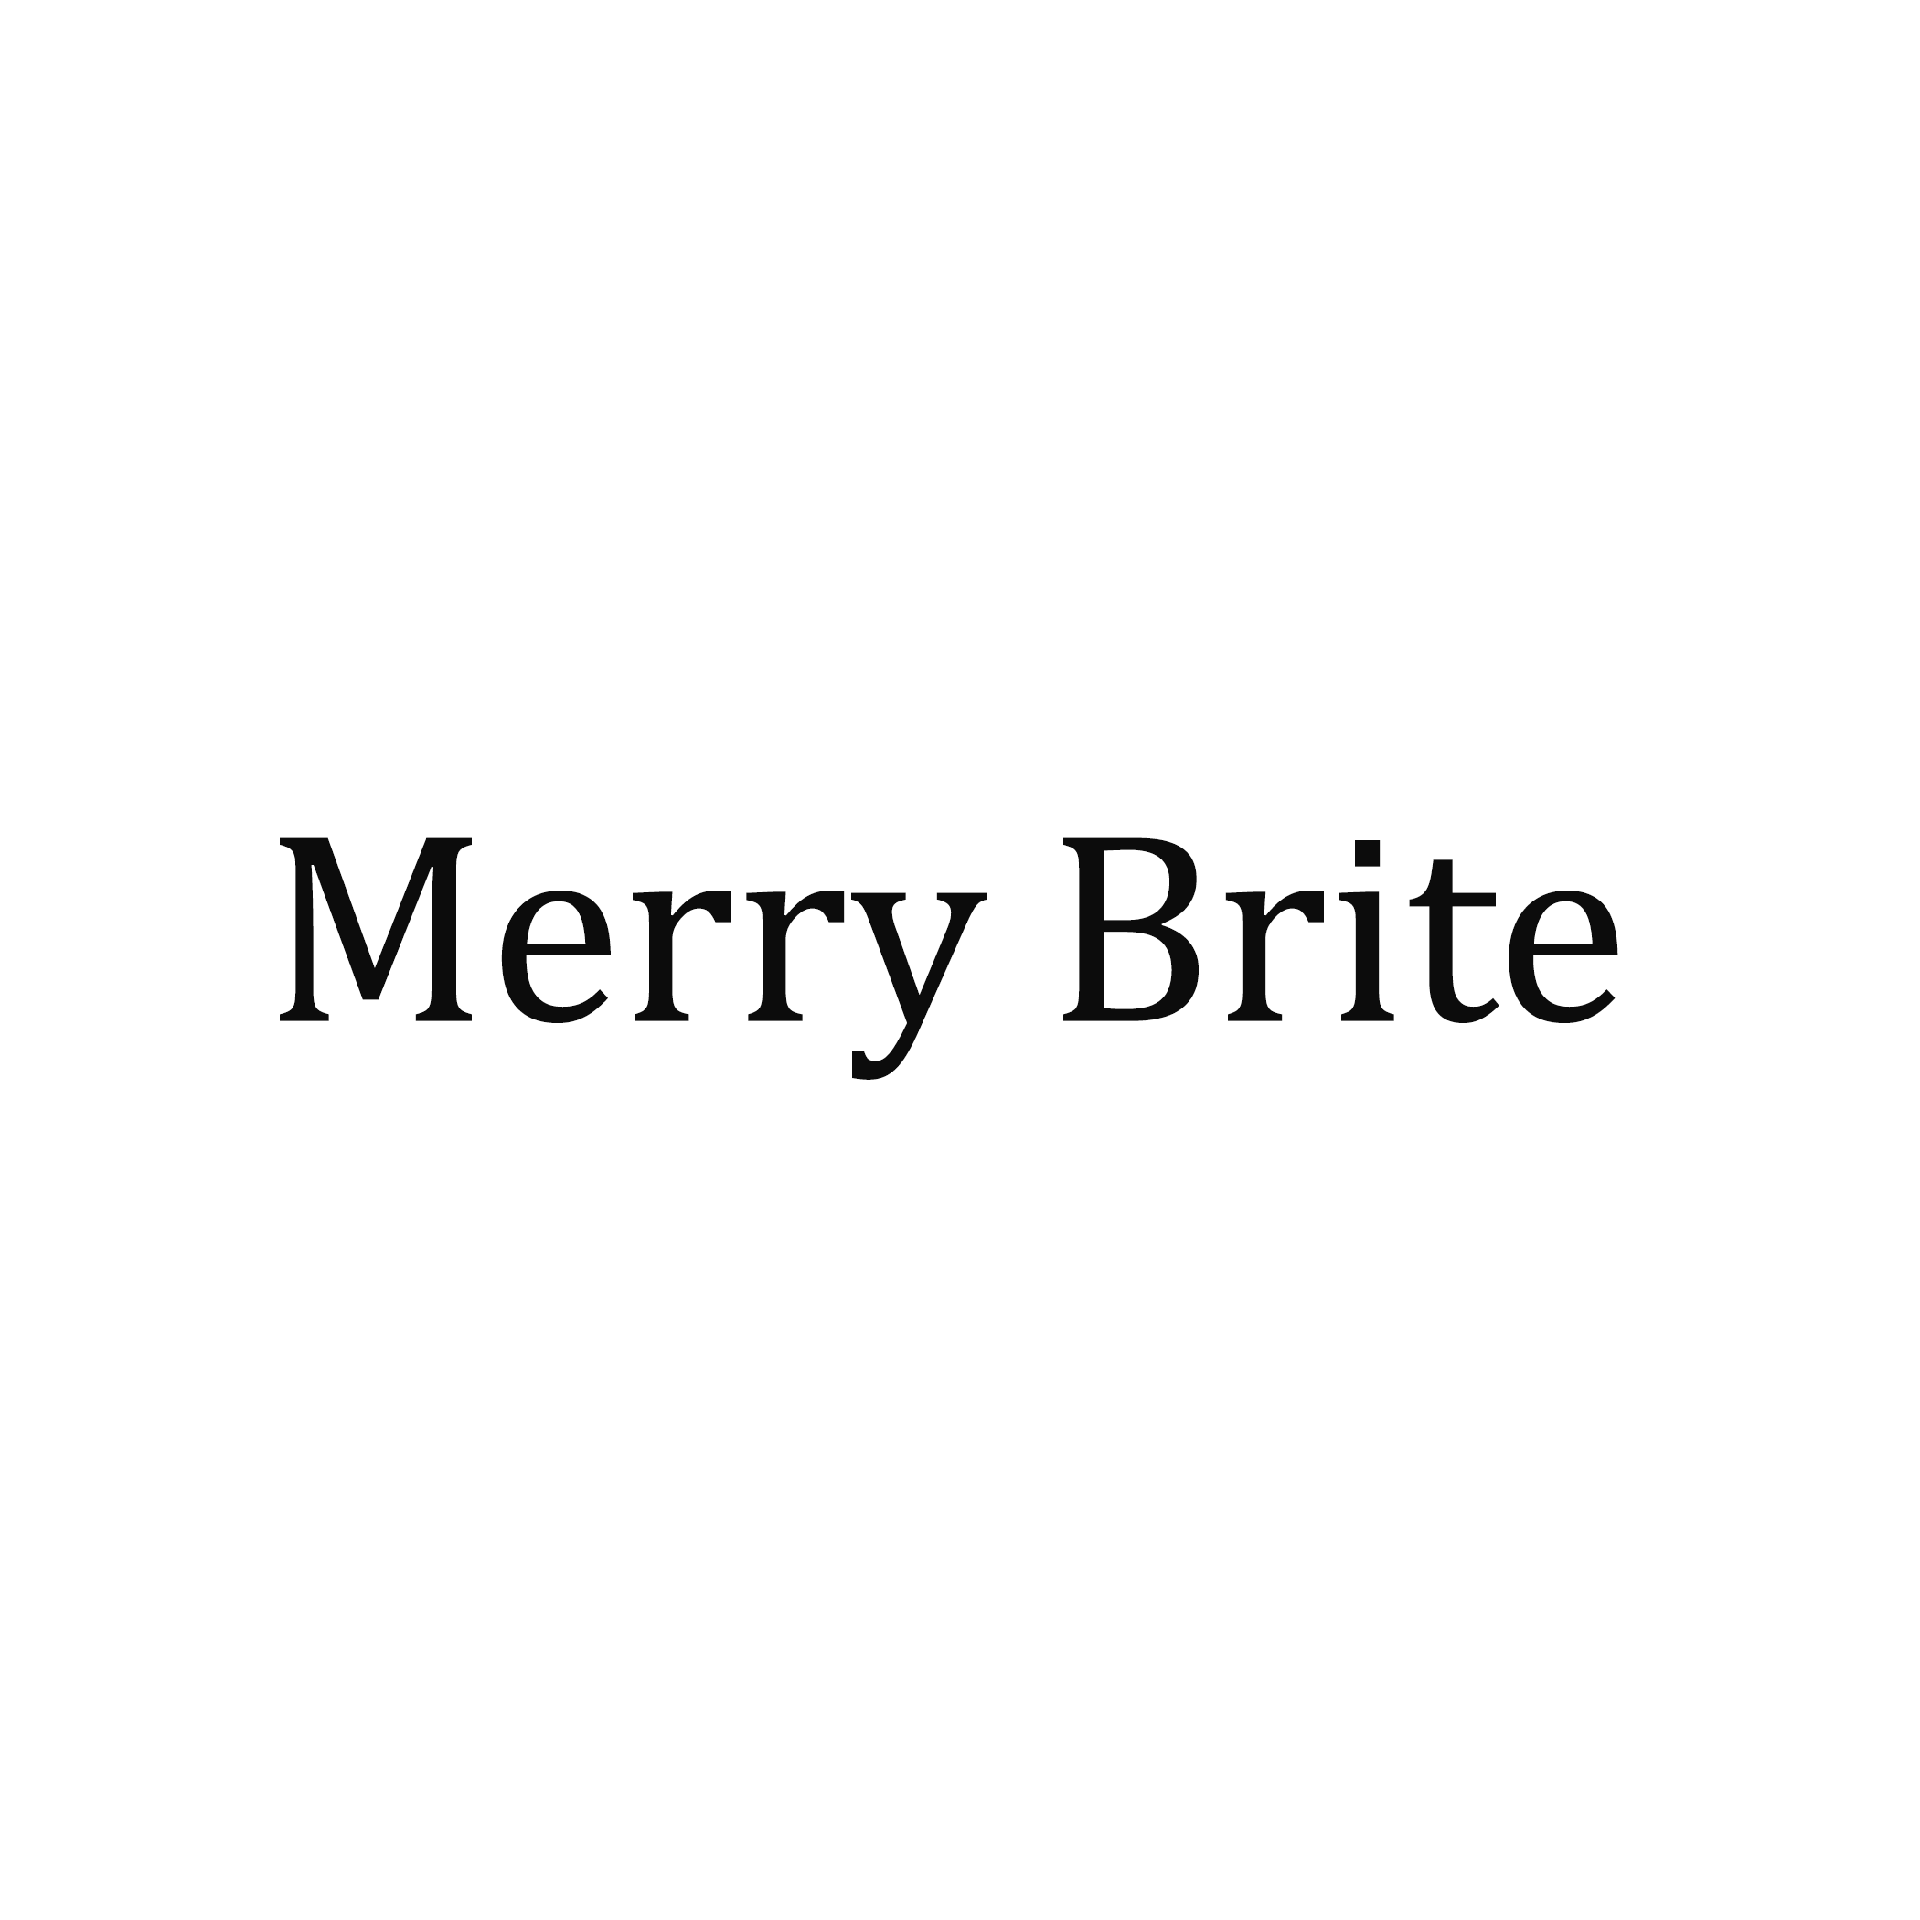 Brand: Merry Brite